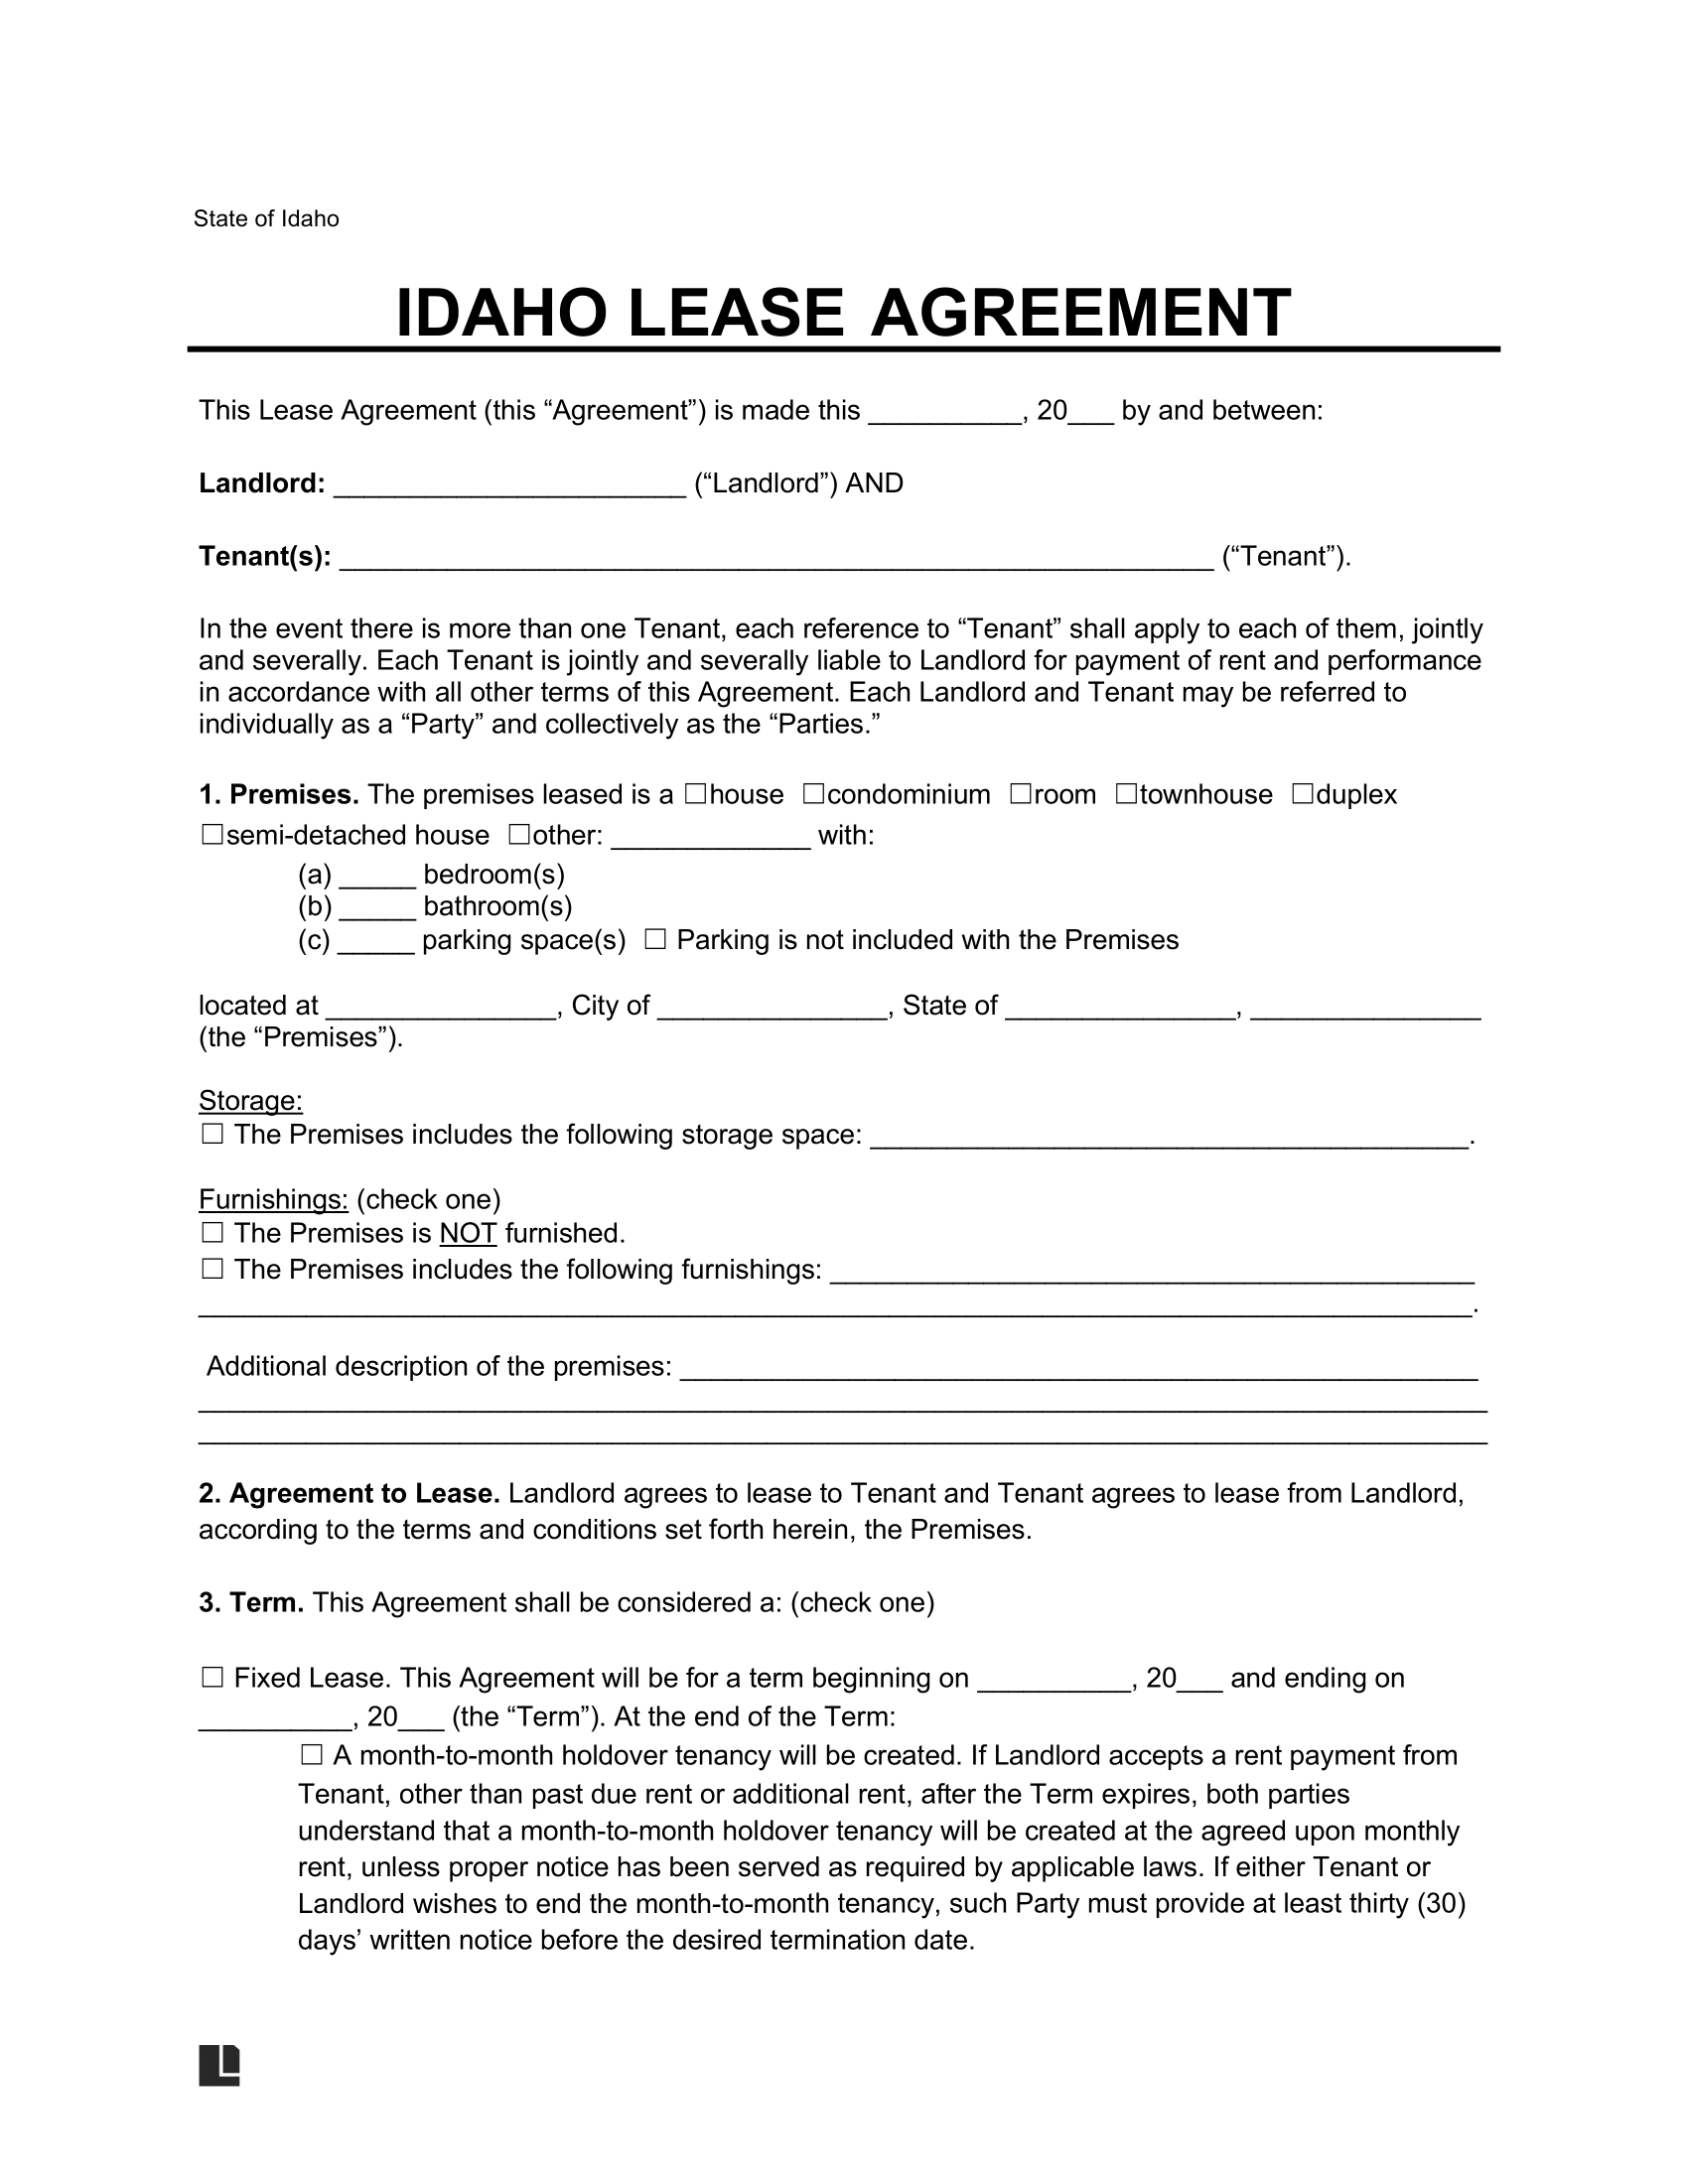 idaho lease agreement